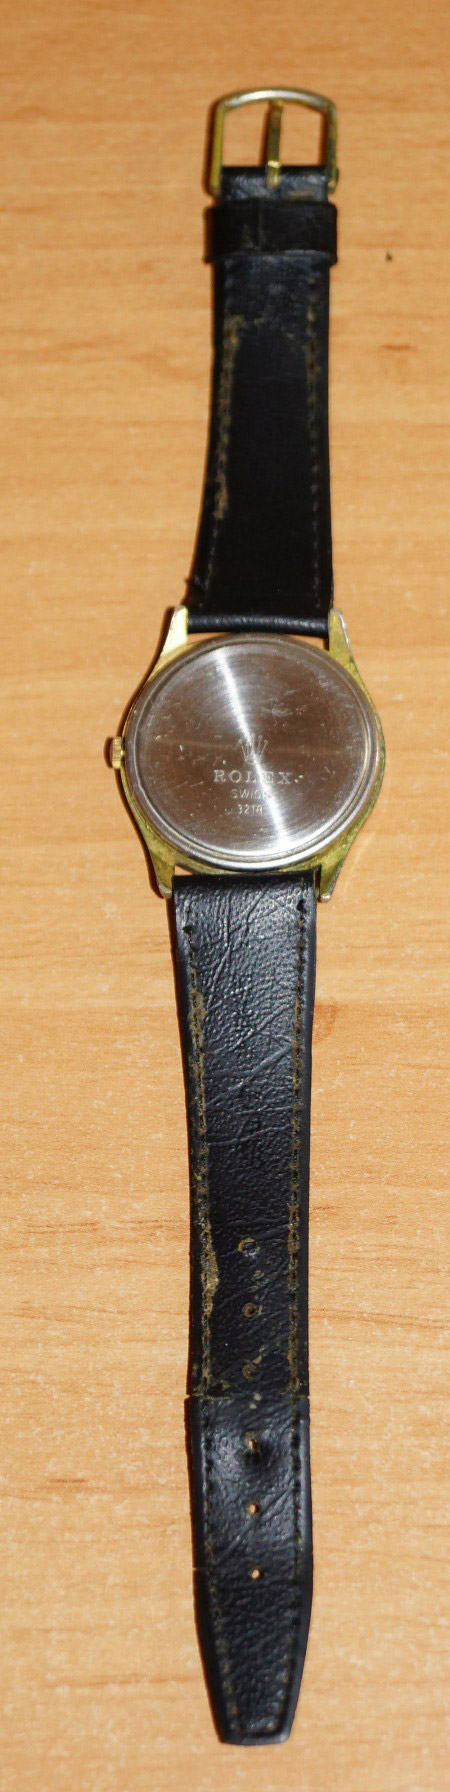 Rolex - Herren - Armbanduhr - 1 - 1000.jpg